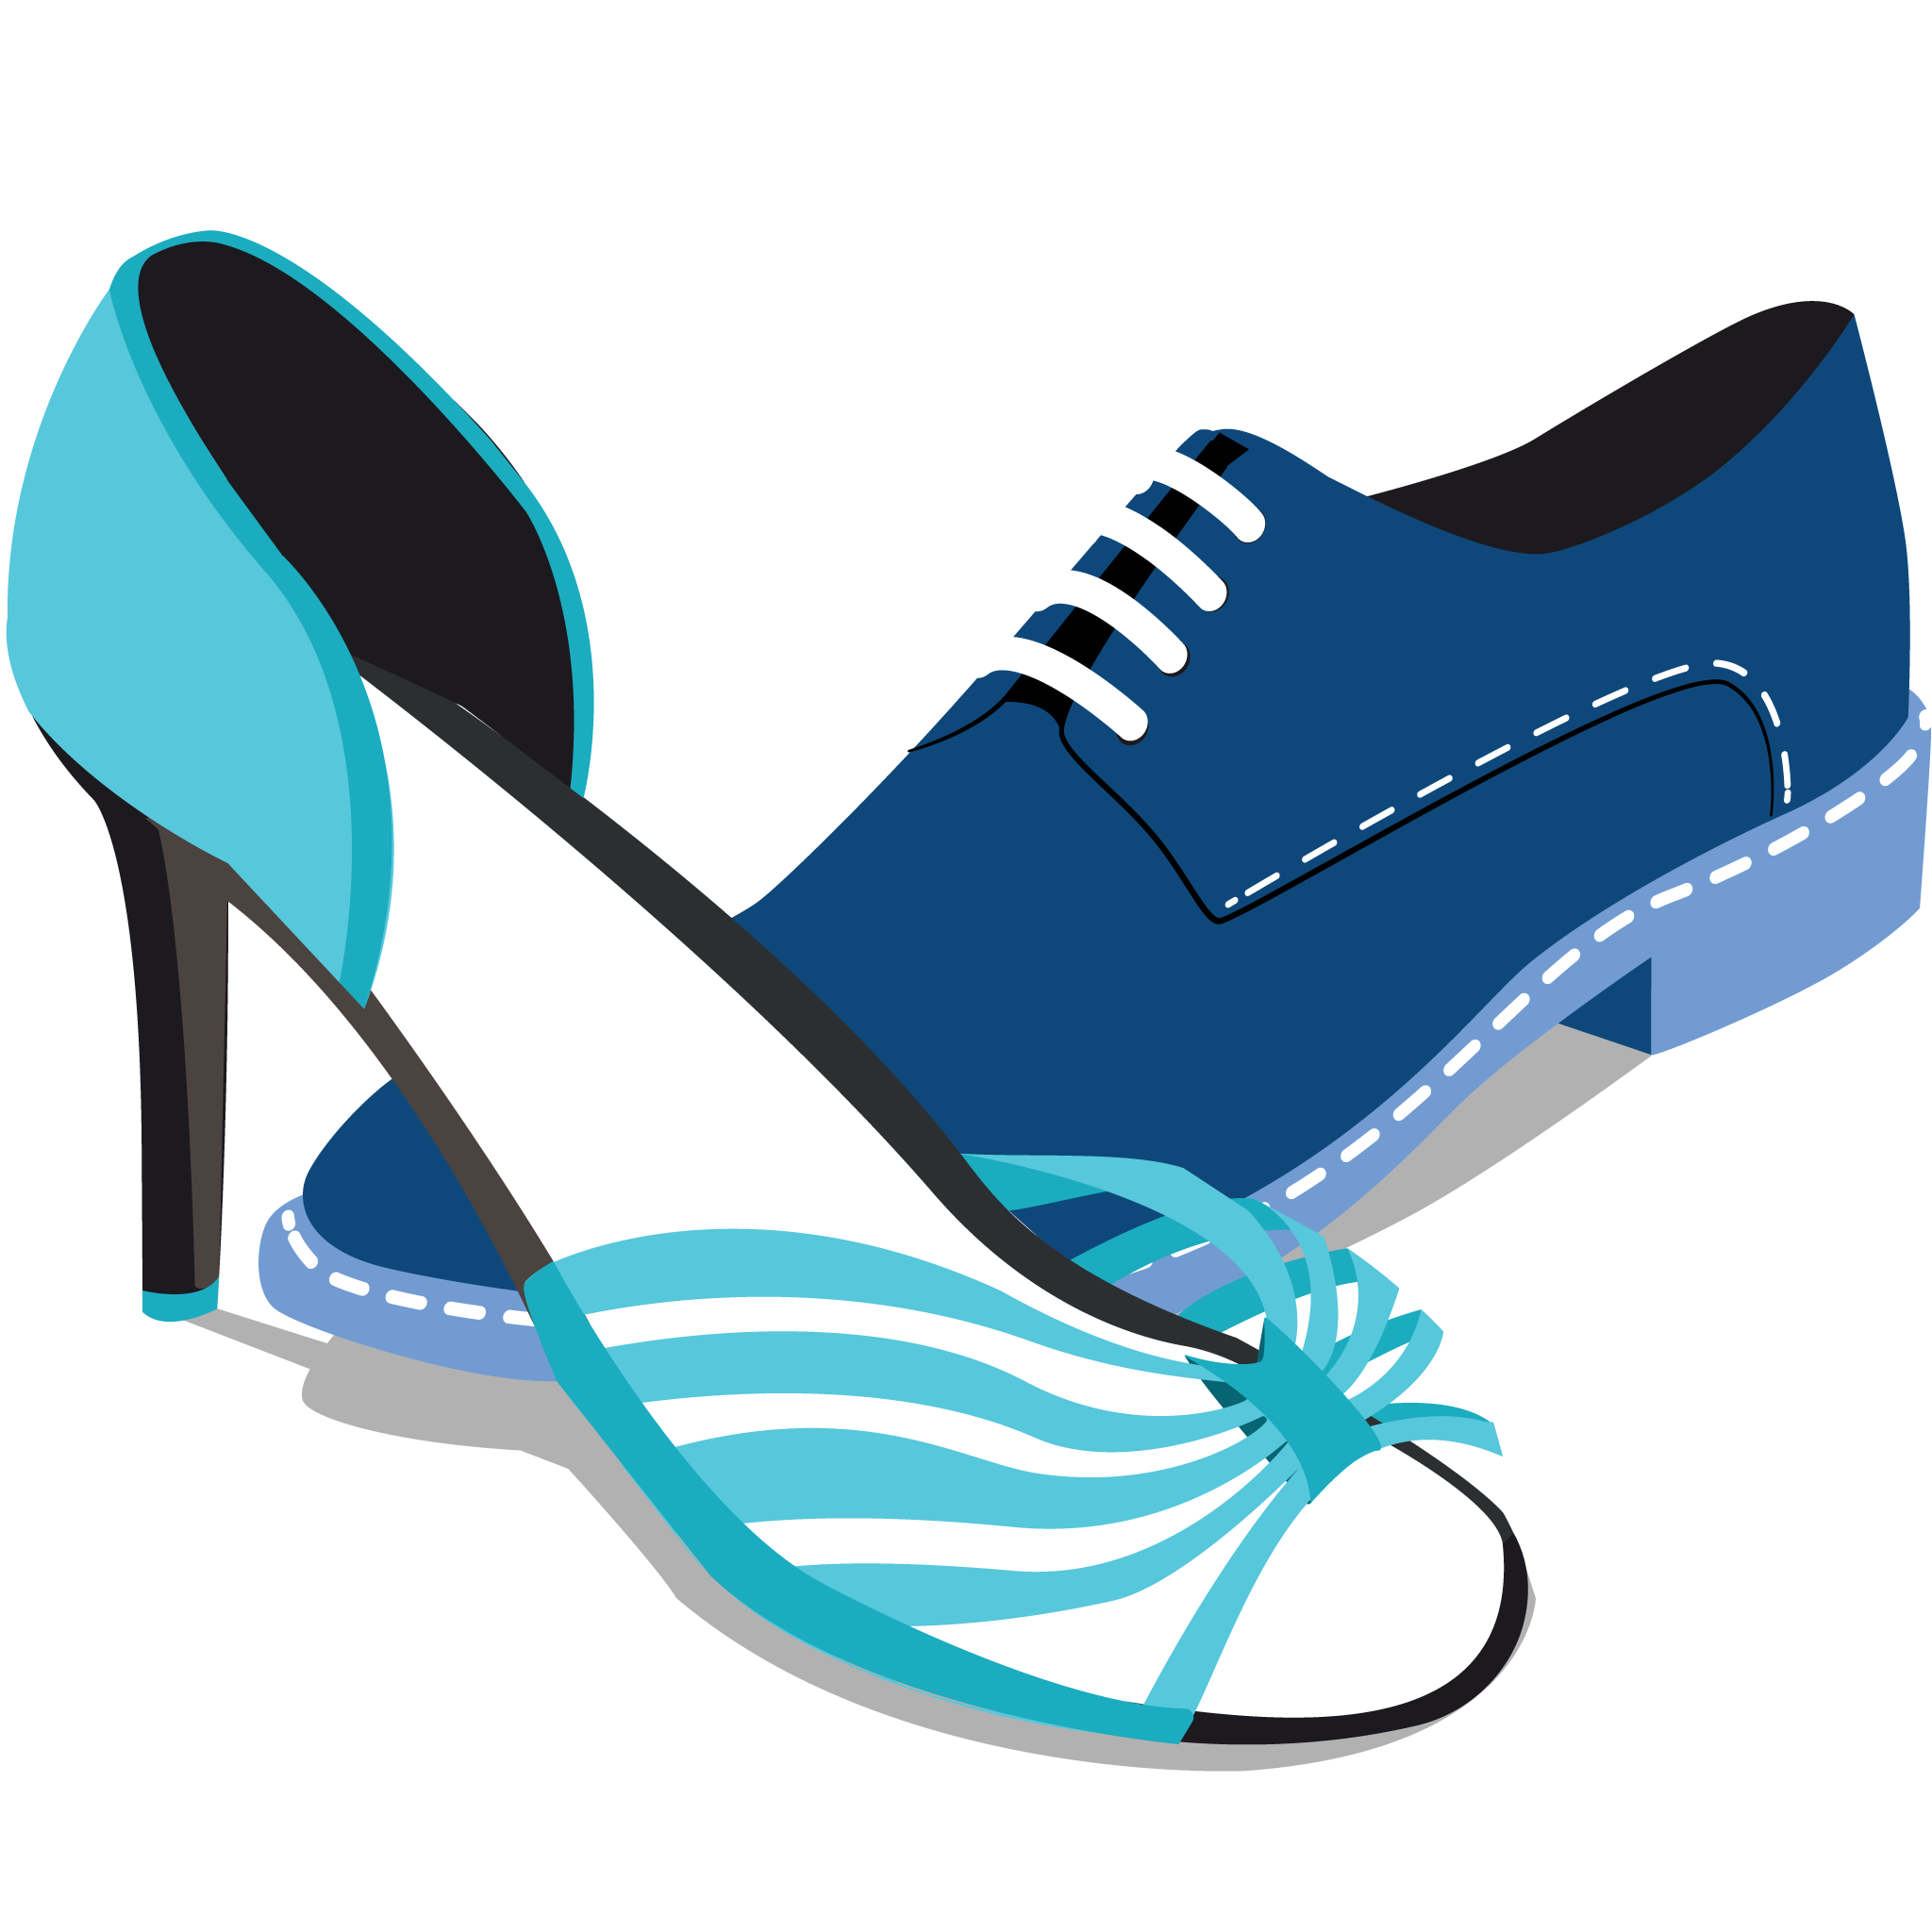 St. James Ballroom - Leidance x Blue Suede Shoes event - Blue Suede Shoes